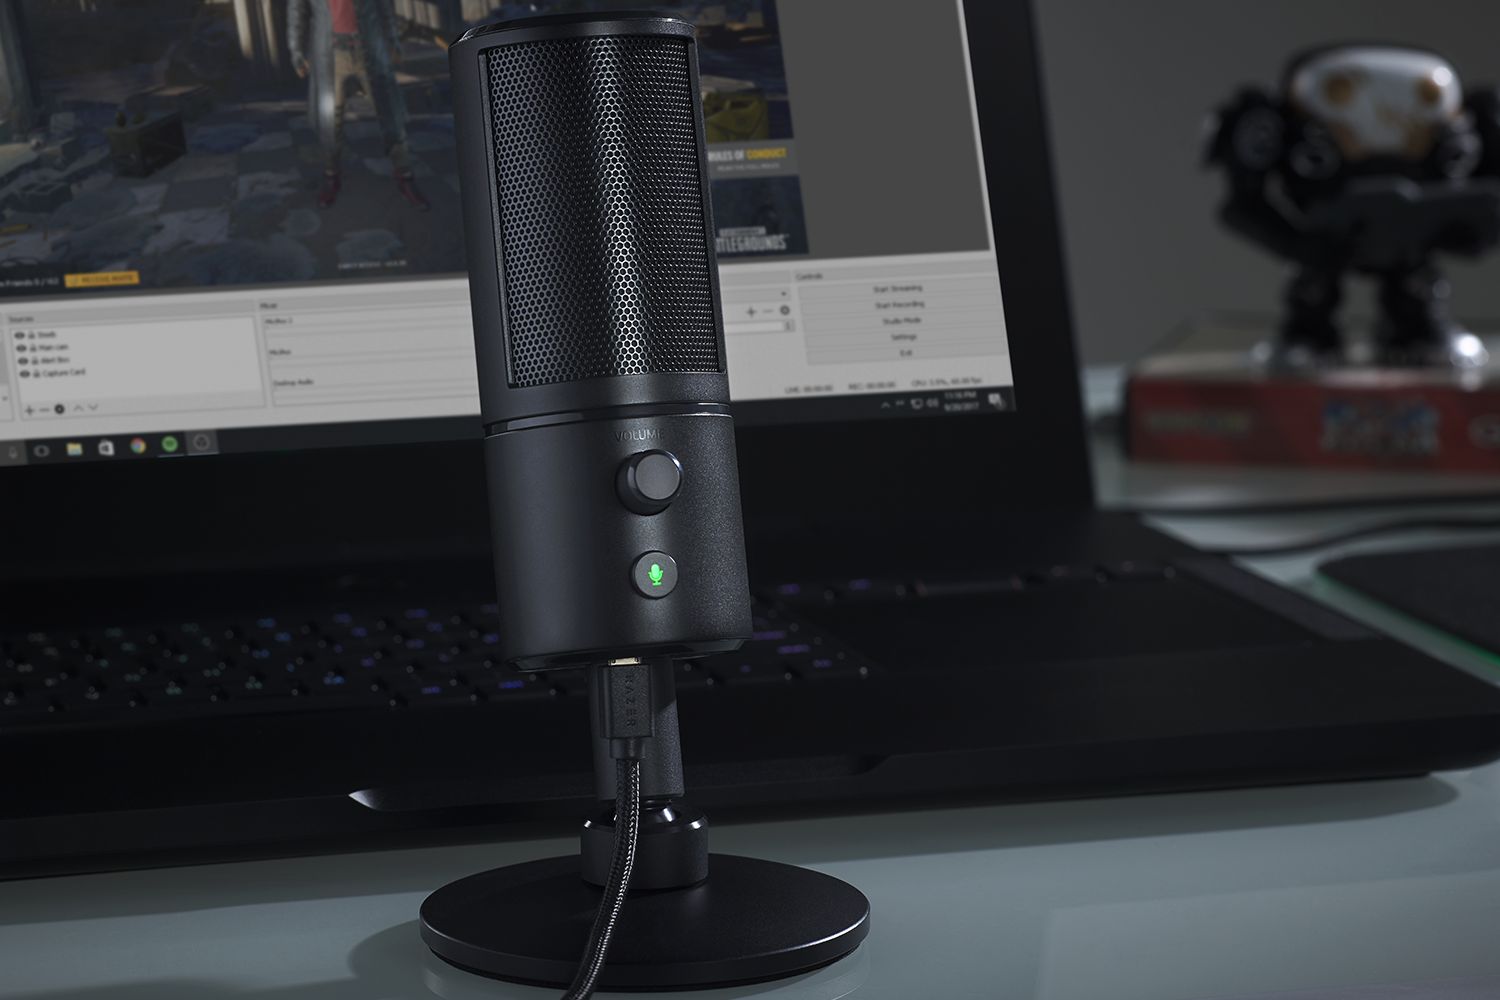 Razer Seiren X Gaming Microphone Review – Testing Testing 1, 2, 3